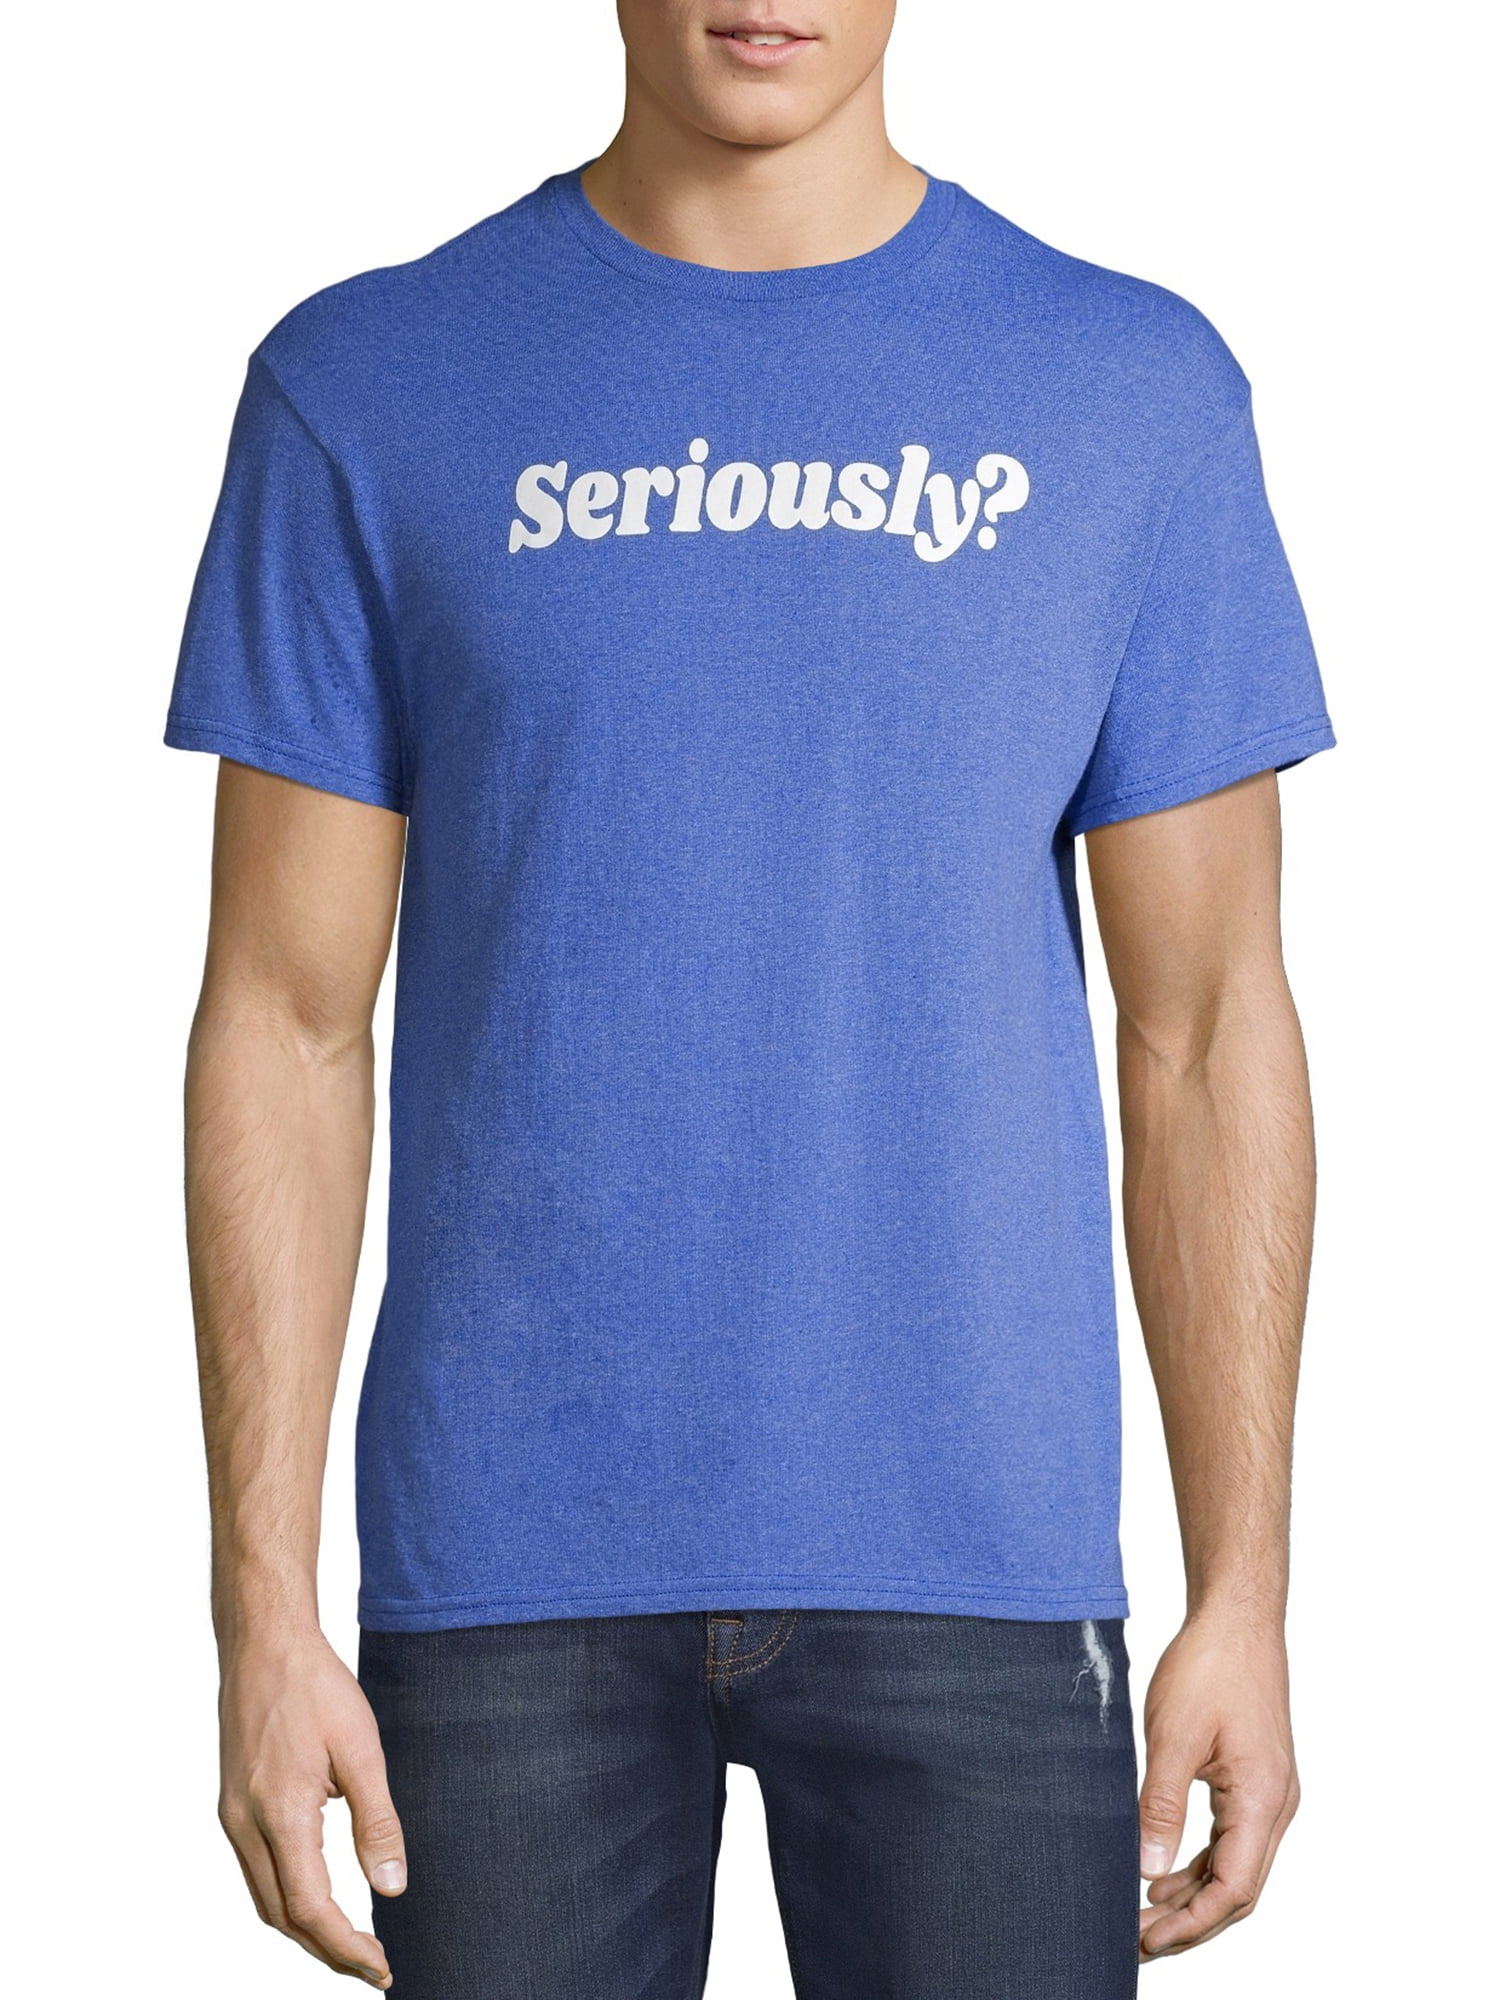 Seriously Men's and Big Men's Graphic T-shirt - Walmart.com